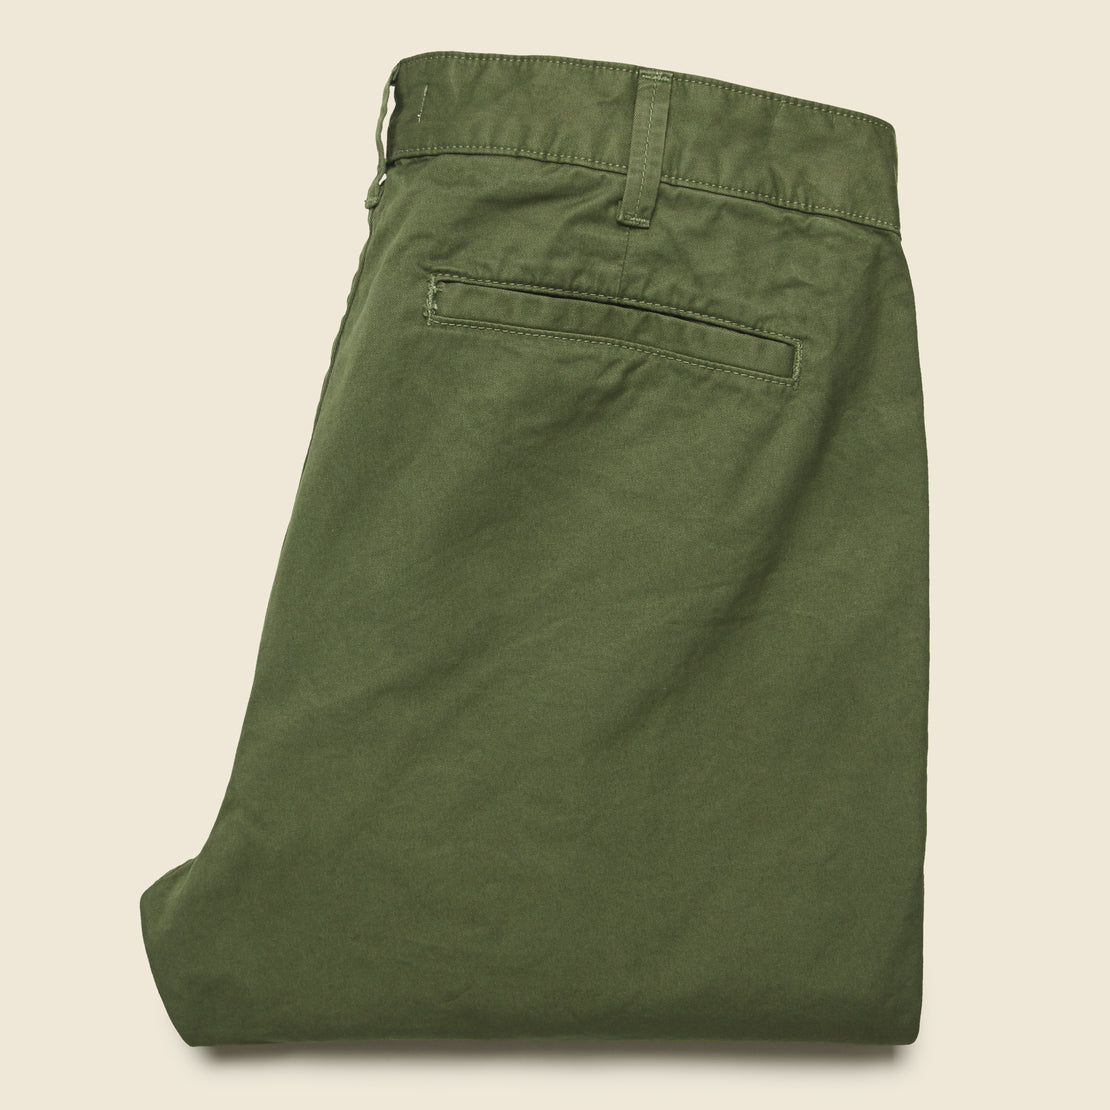 Twill Standard Chino - Army - Save Khaki - STAG Provisions - Pants - Twill